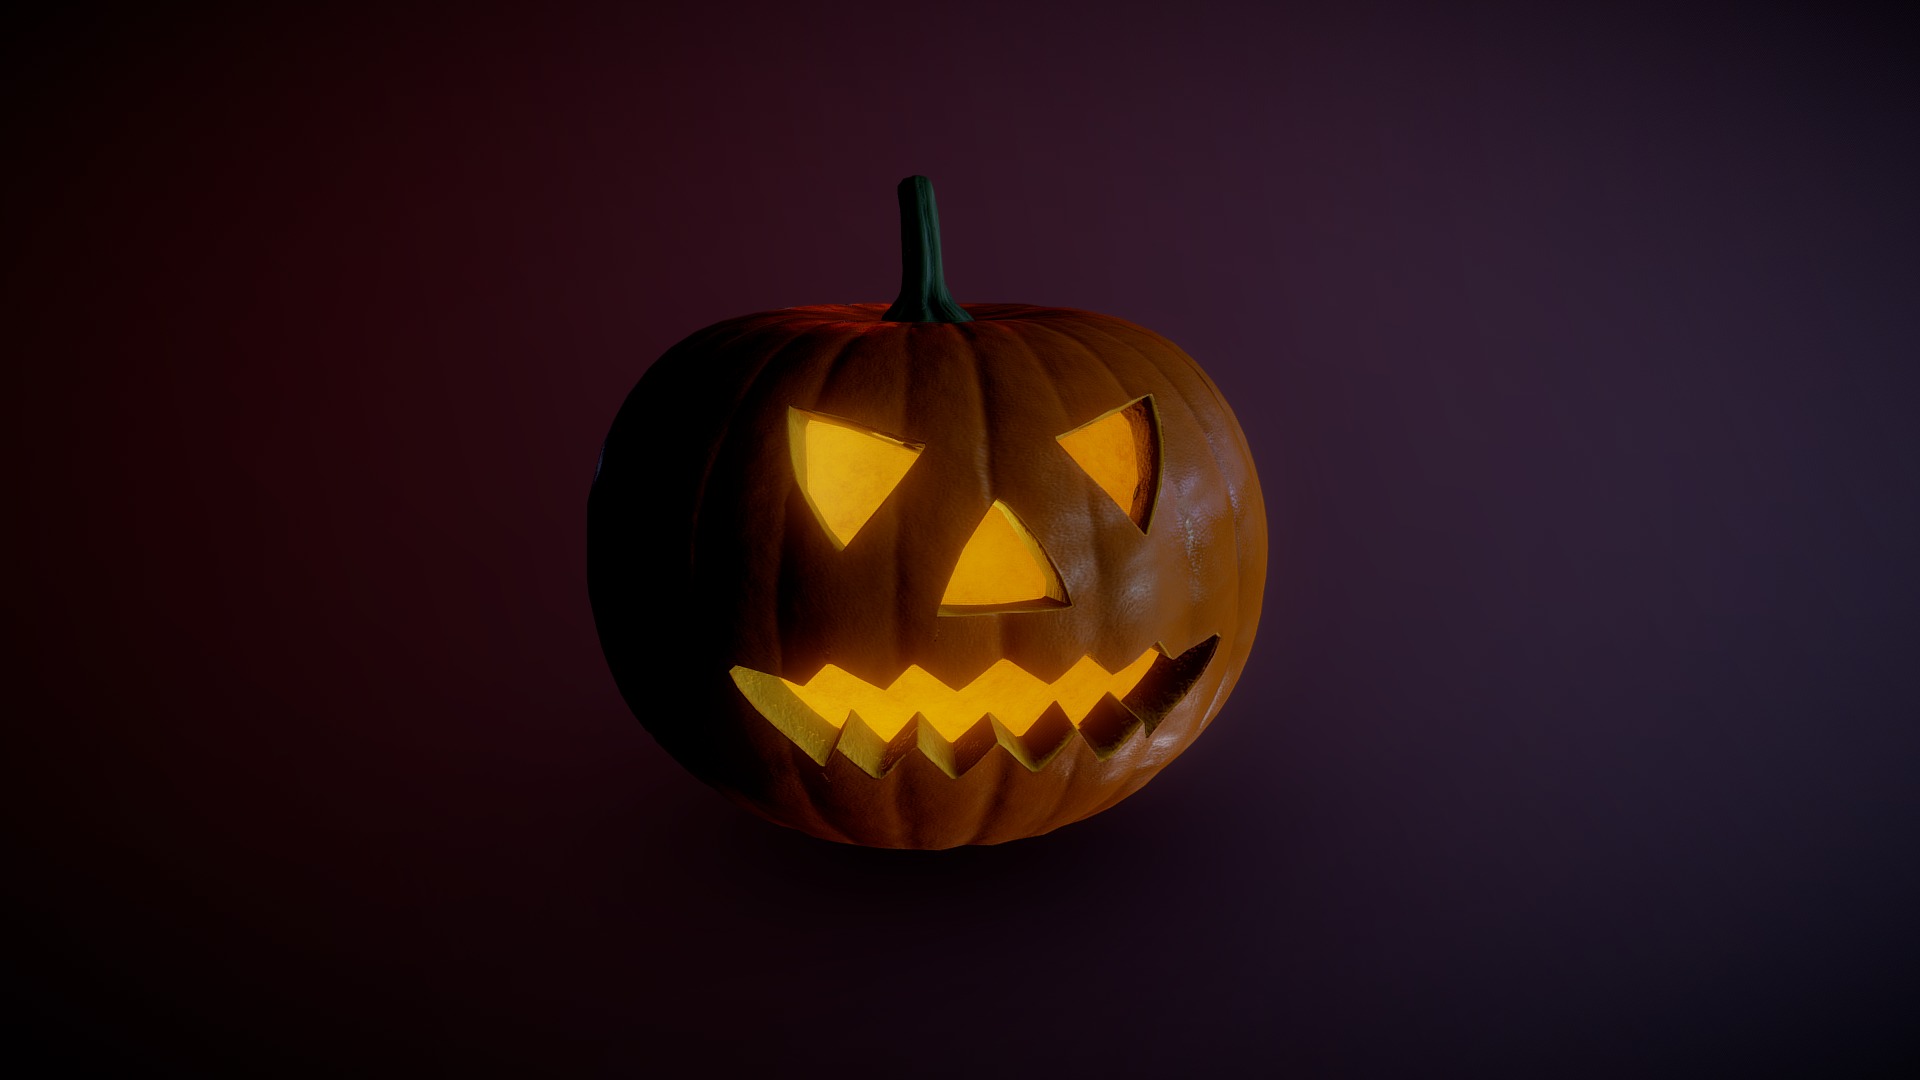 3D model Halloween Pumpkin Head Jack-o’-lantern - This is a 3D model of the Halloween Pumpkin Head Jack-o'-lantern. The 3D model is about a carved pumpkin with a light inside.